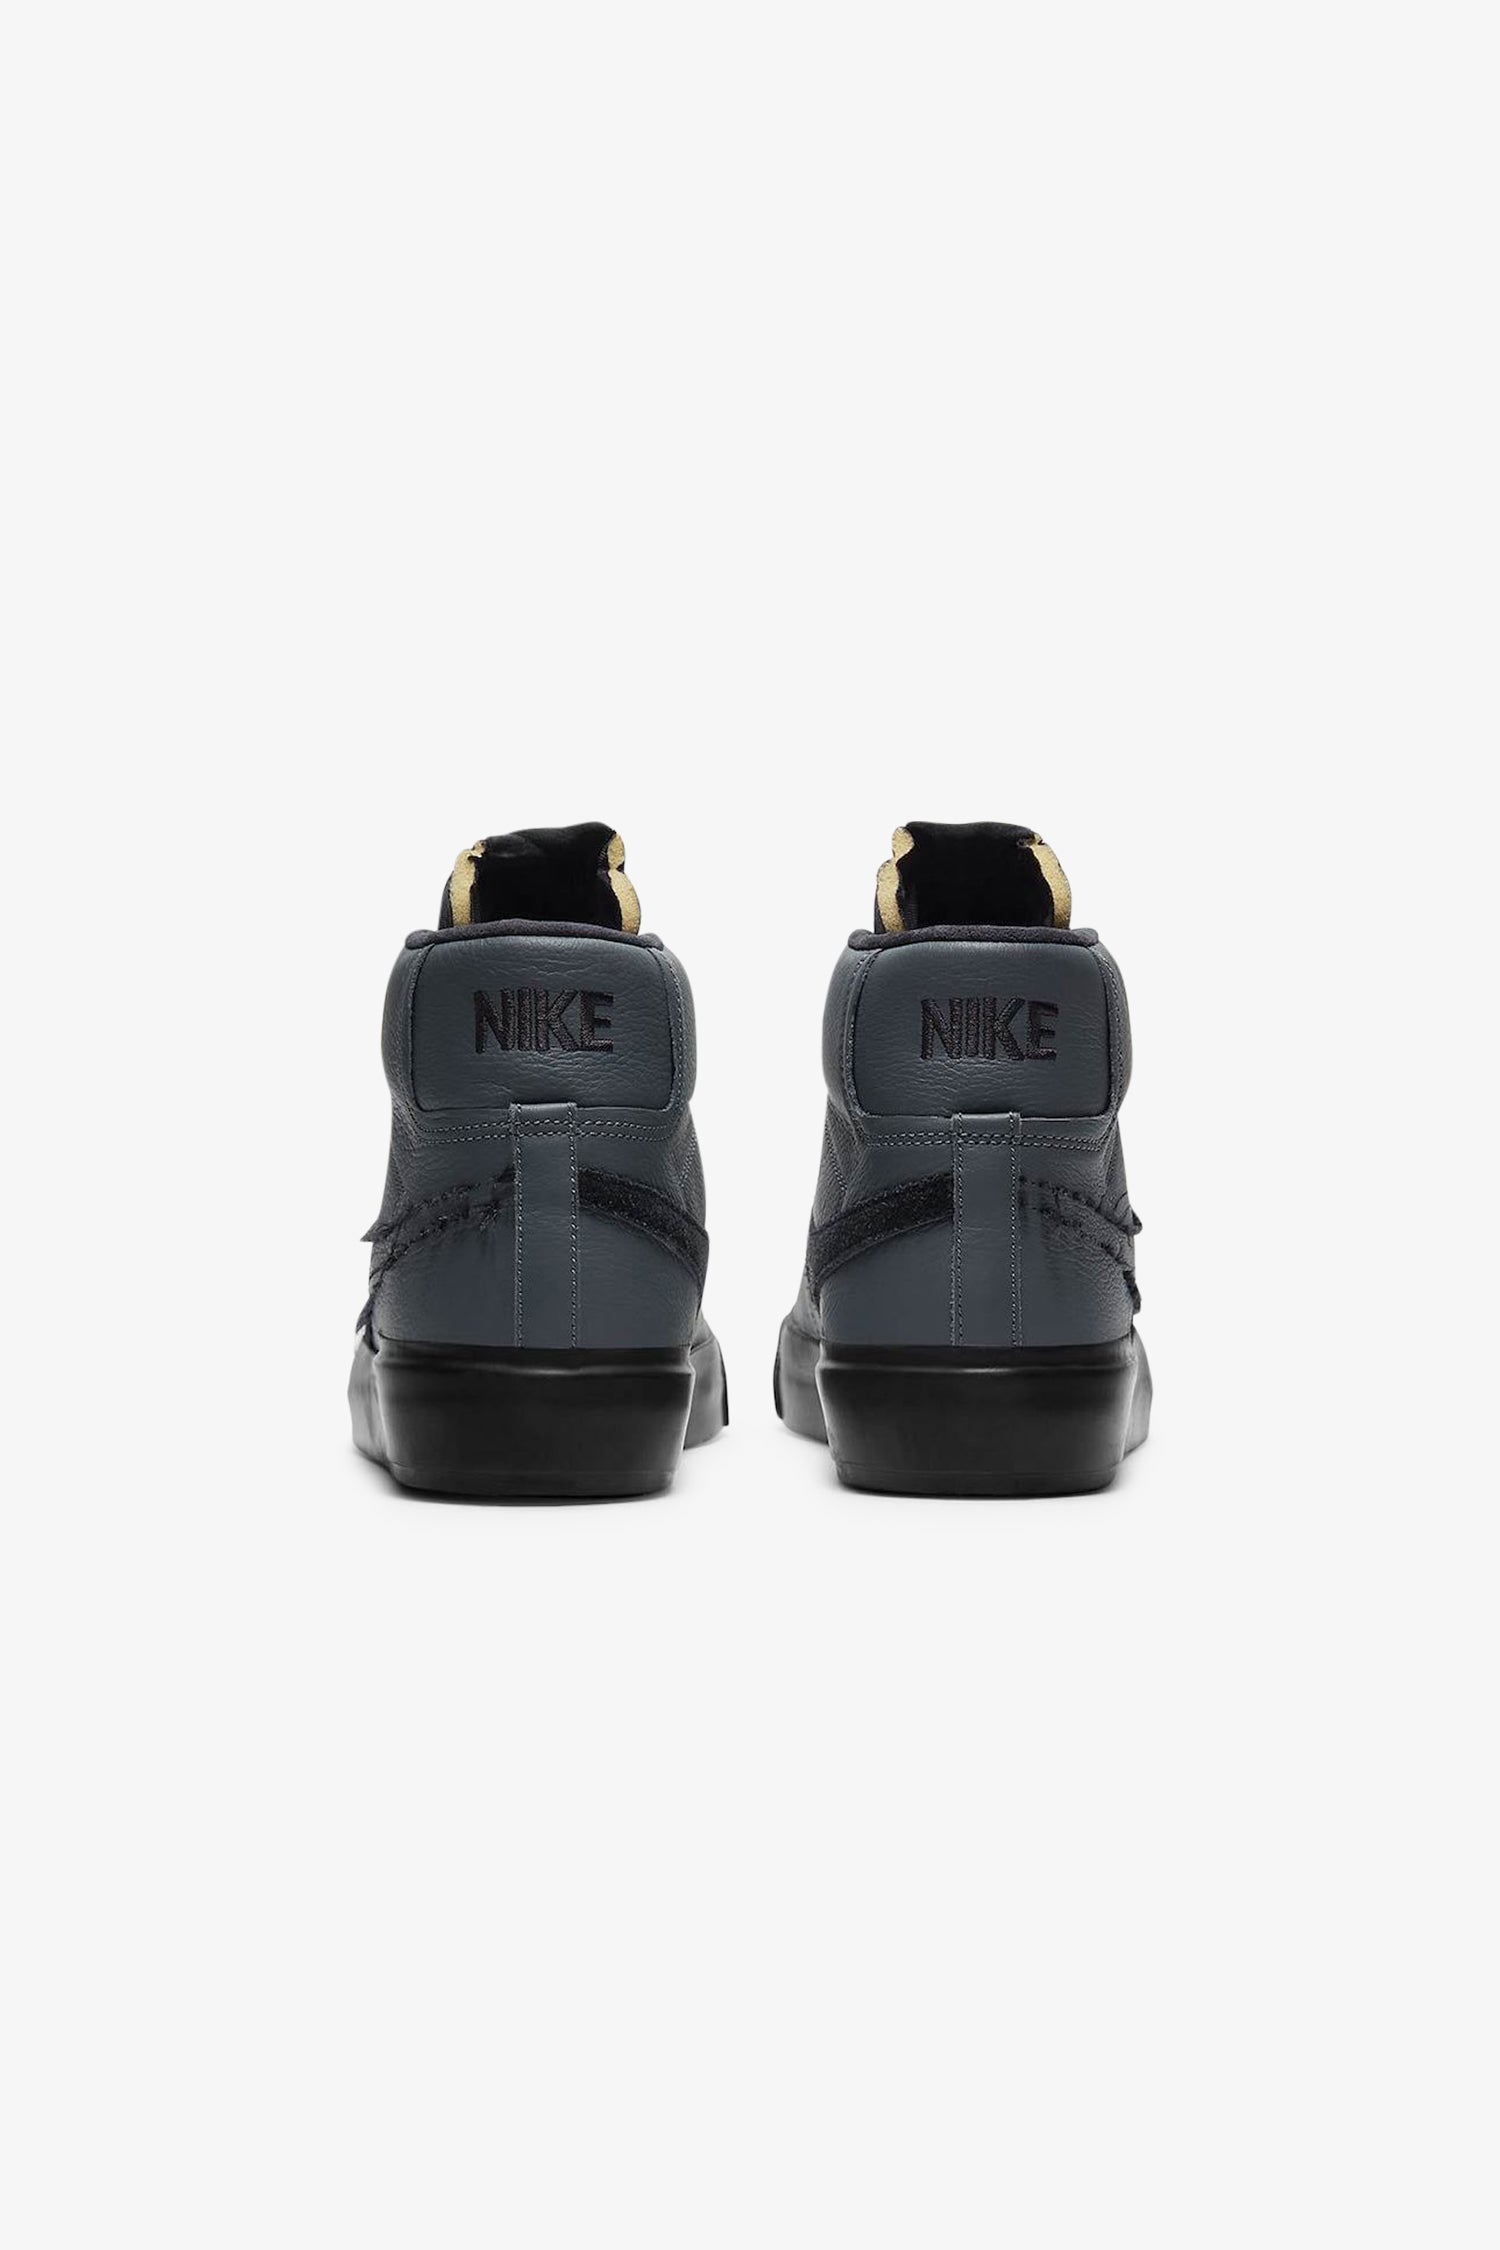 Selectshop FRAME - NIKE SB Zoom Blazer Mid Edge "Hack Pack" Footwear Dubai